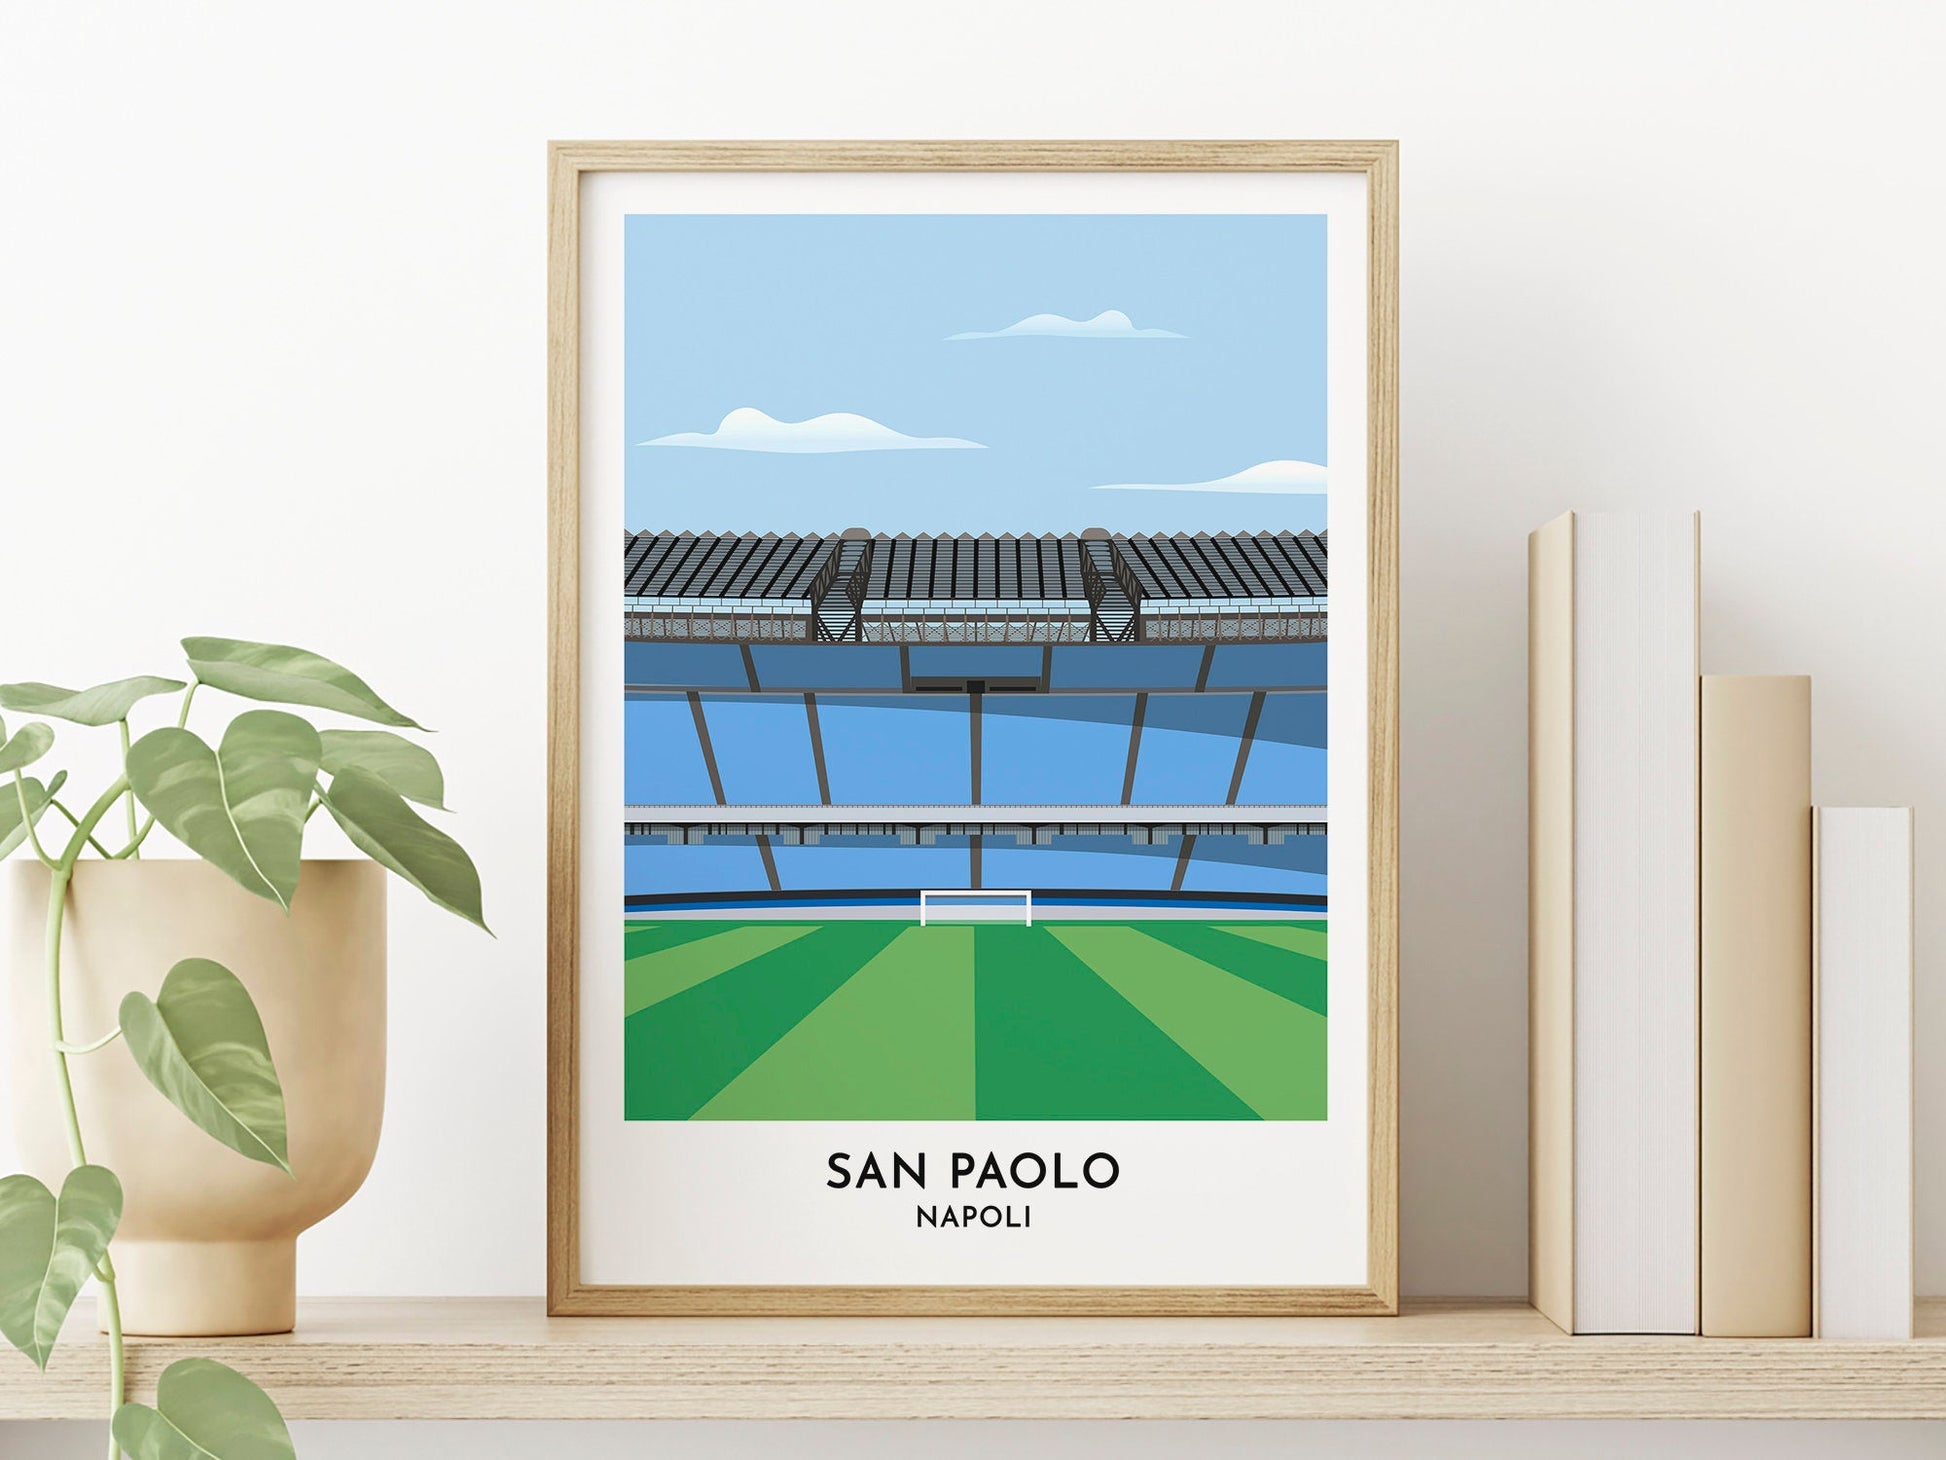 Napoli Football Calcio Poster, Diego Armando Maradona Stadium / Stadio San Paolo Print Gift, Italia Italian Football Print - Turf Football Art